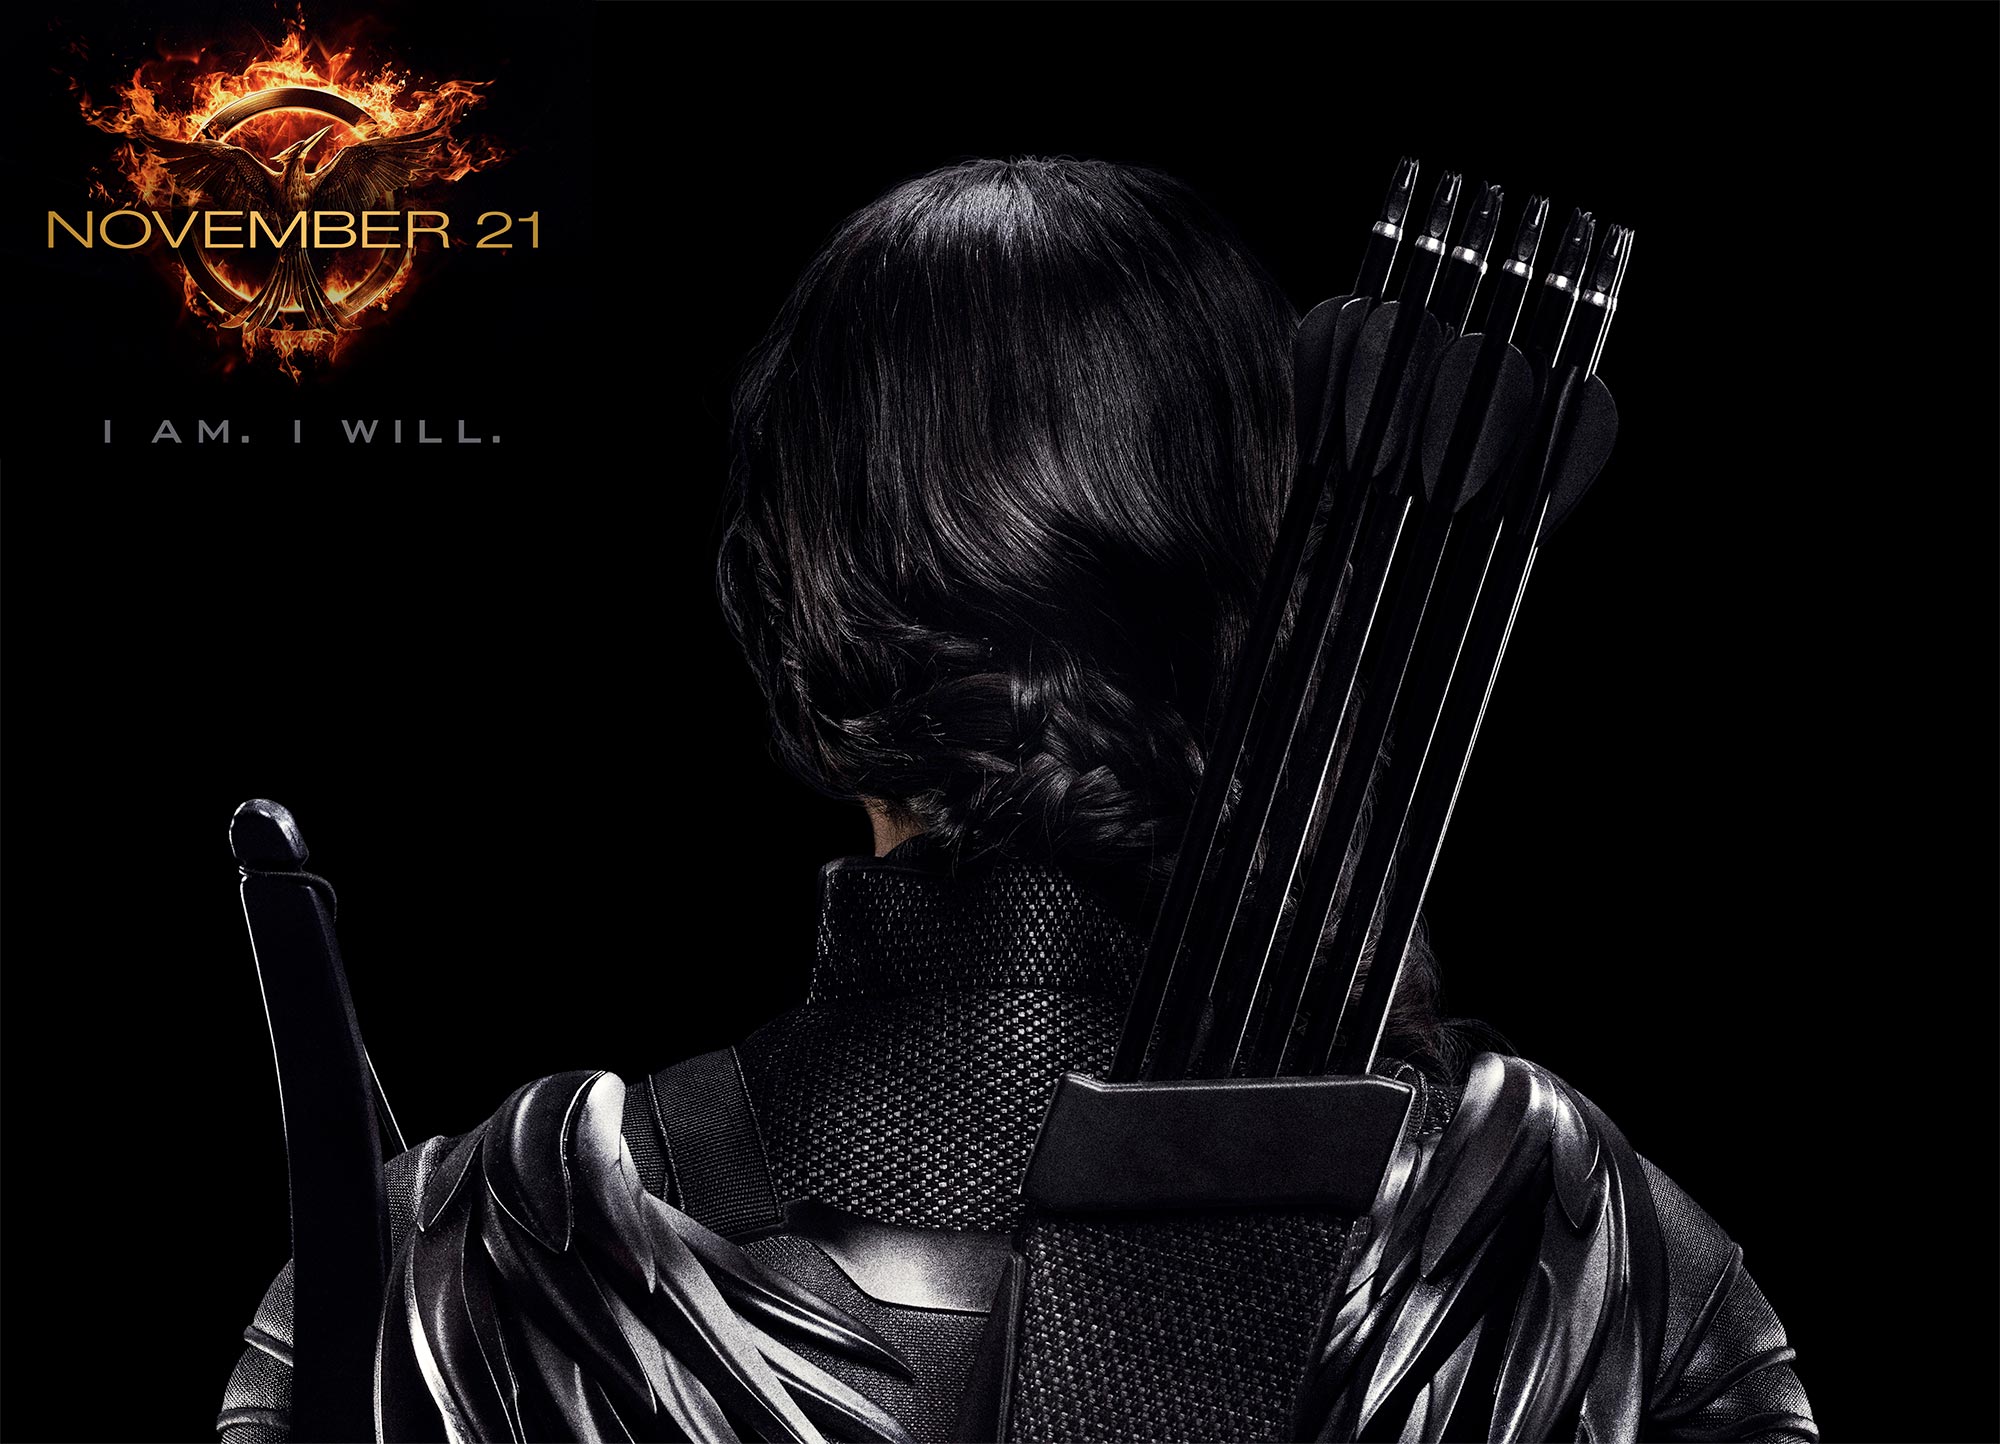 THE HUNGER GAMES: MOCKINGJAY ­PART 1 Poster: Katniss Rebel Warrior